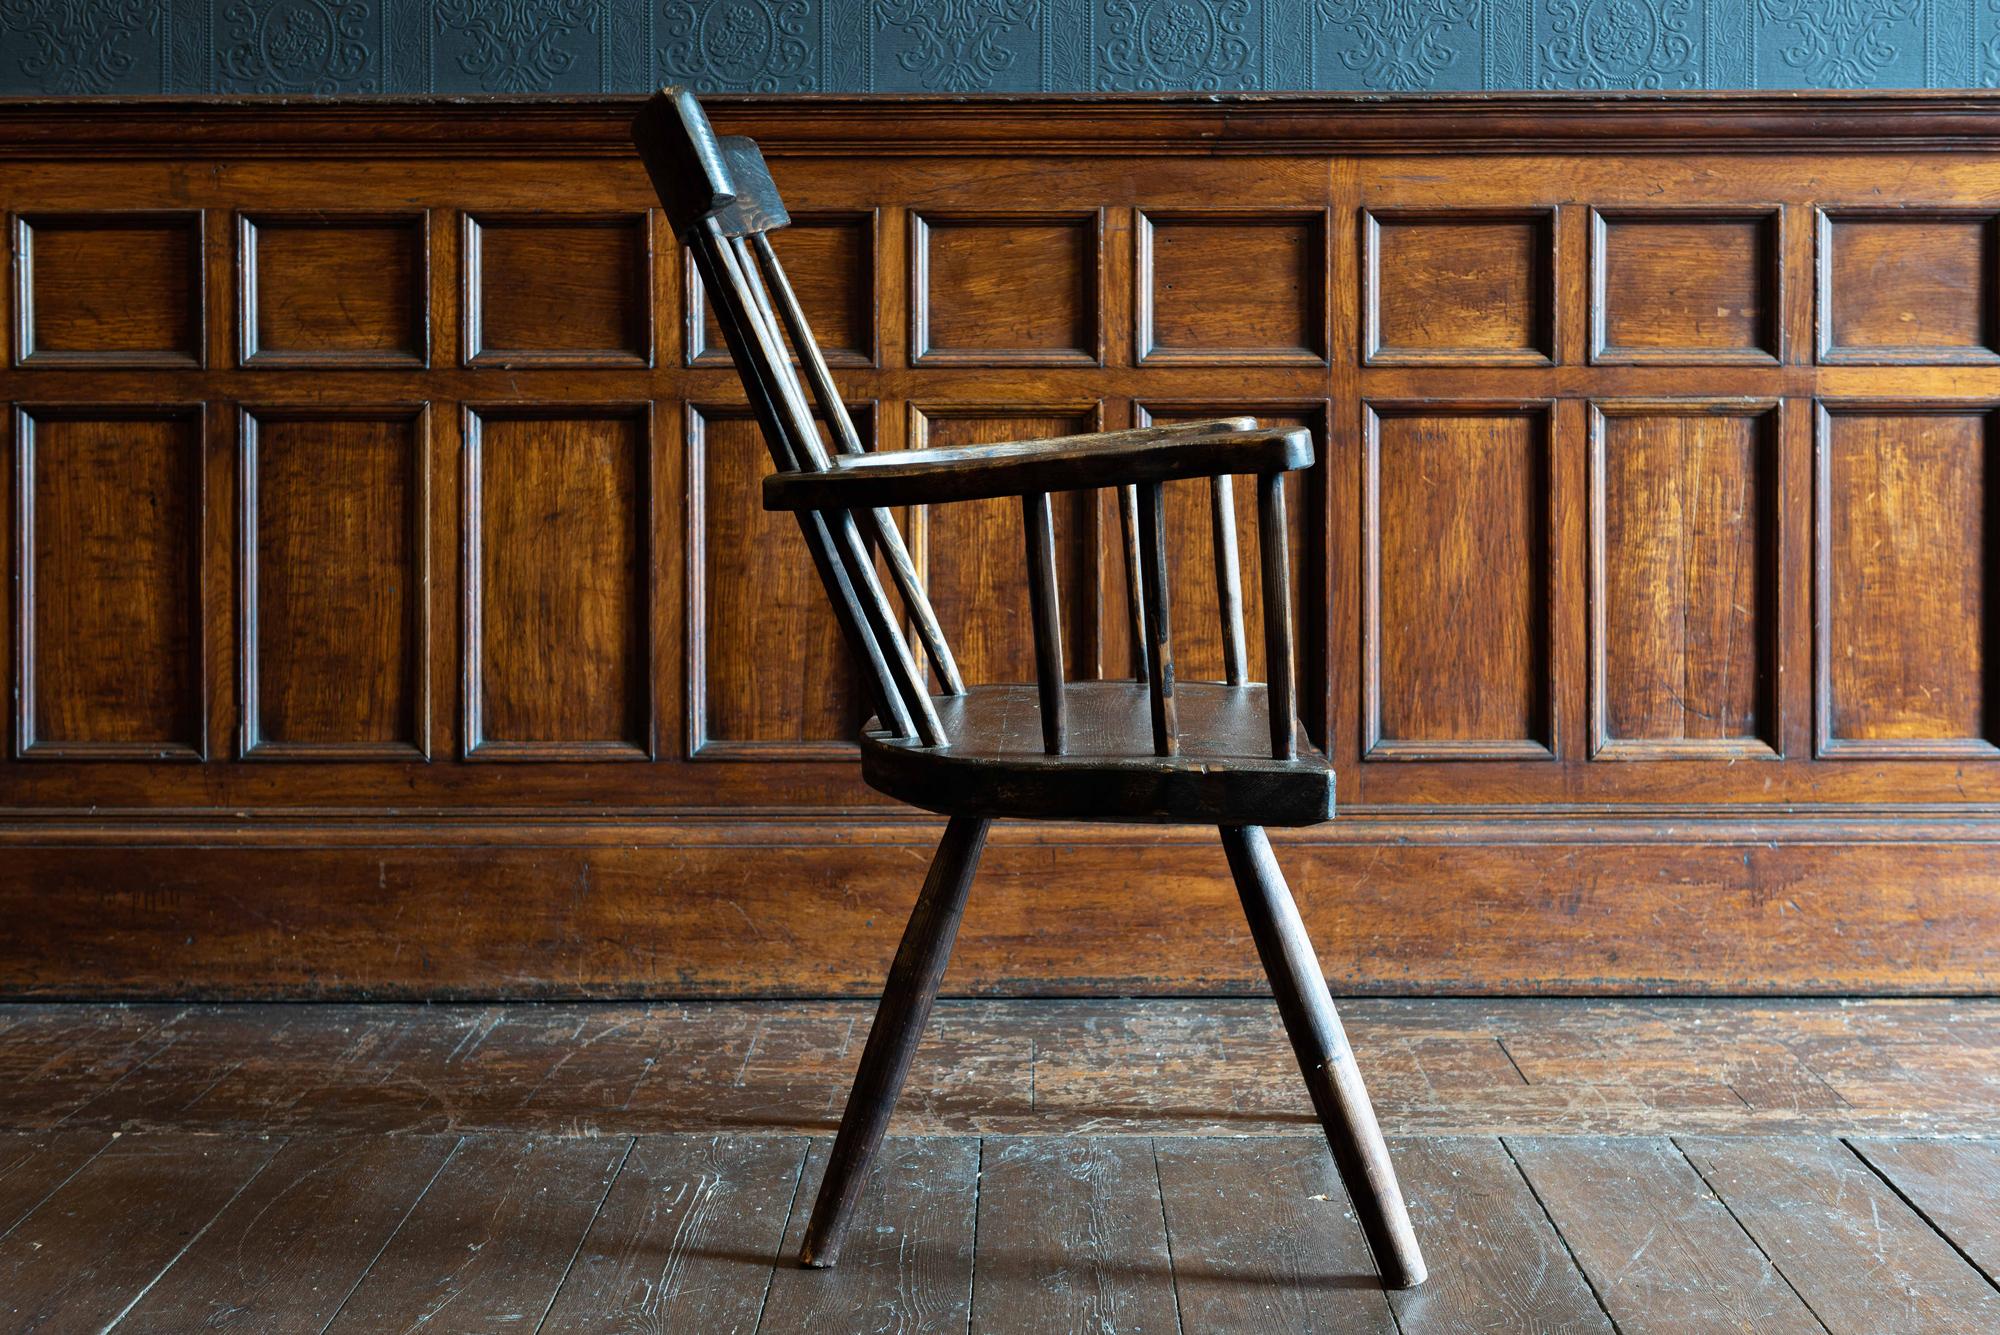 19th century Irish famine chair
Primitive Irish famine chair.
Measures: 100H x 65W x 60D cm
 
 